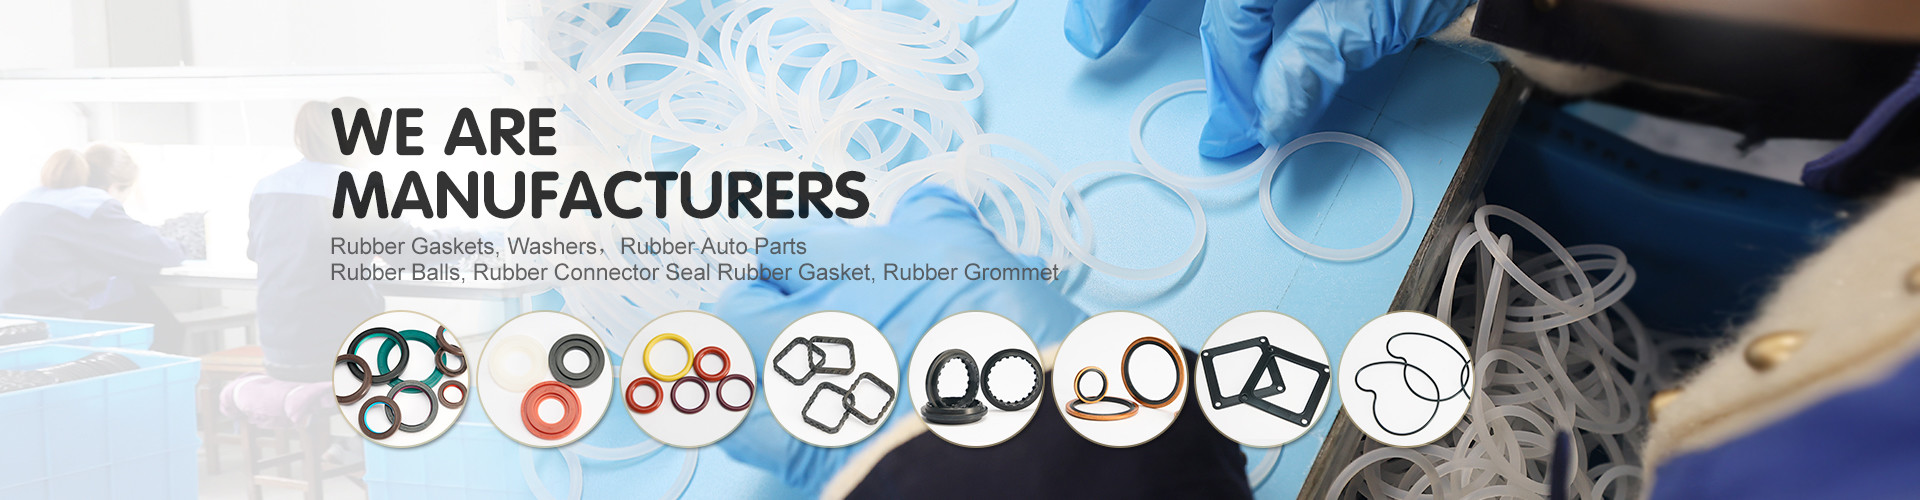 kwaliteit rubbero-ringen fabriek